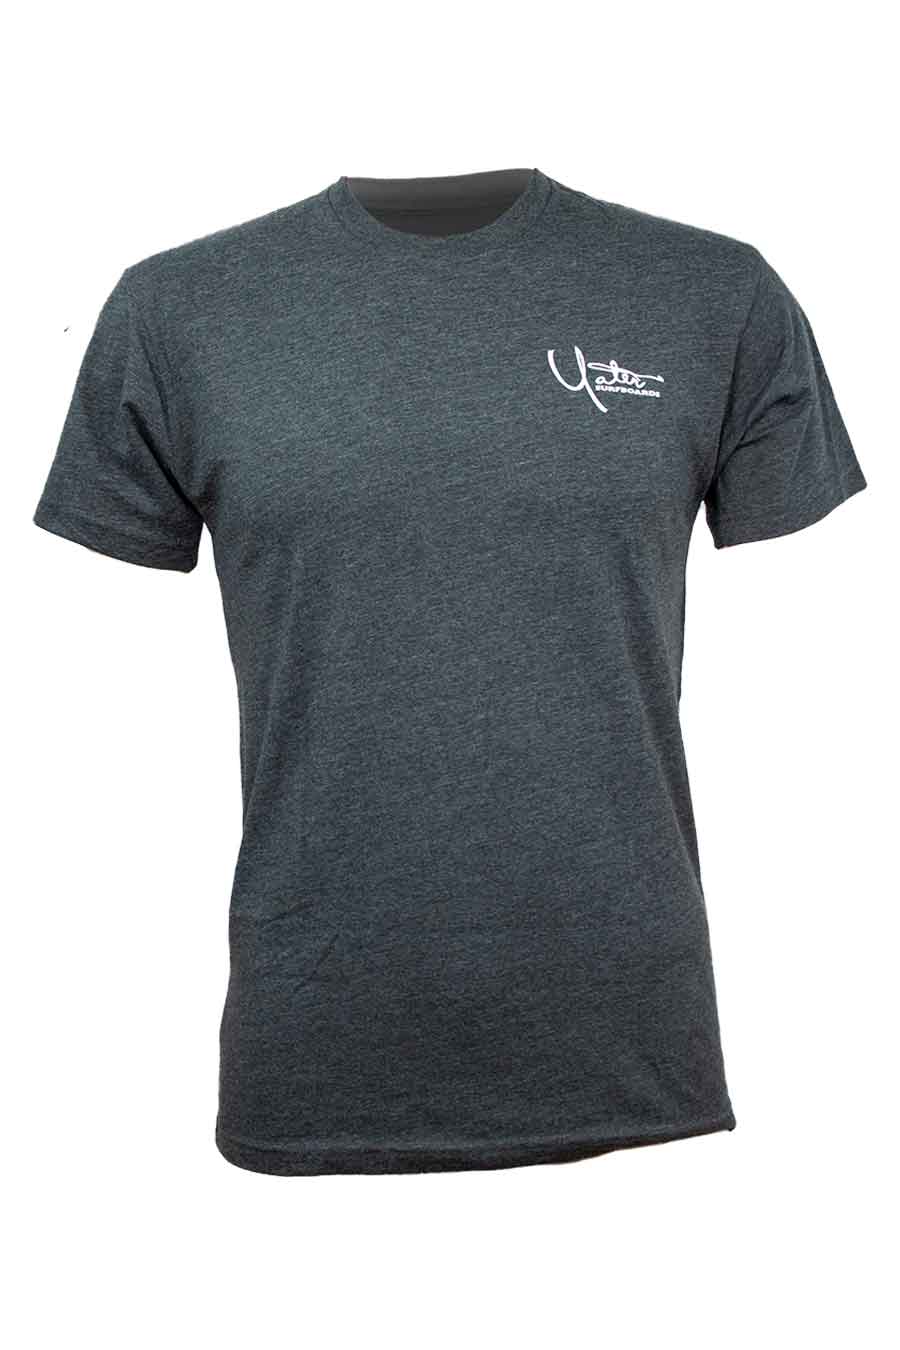 Short Sleeve T-Shirt One-Color Distressed Santa Barbara Surf Shop Logo - Surf N' Wear Beach House Online